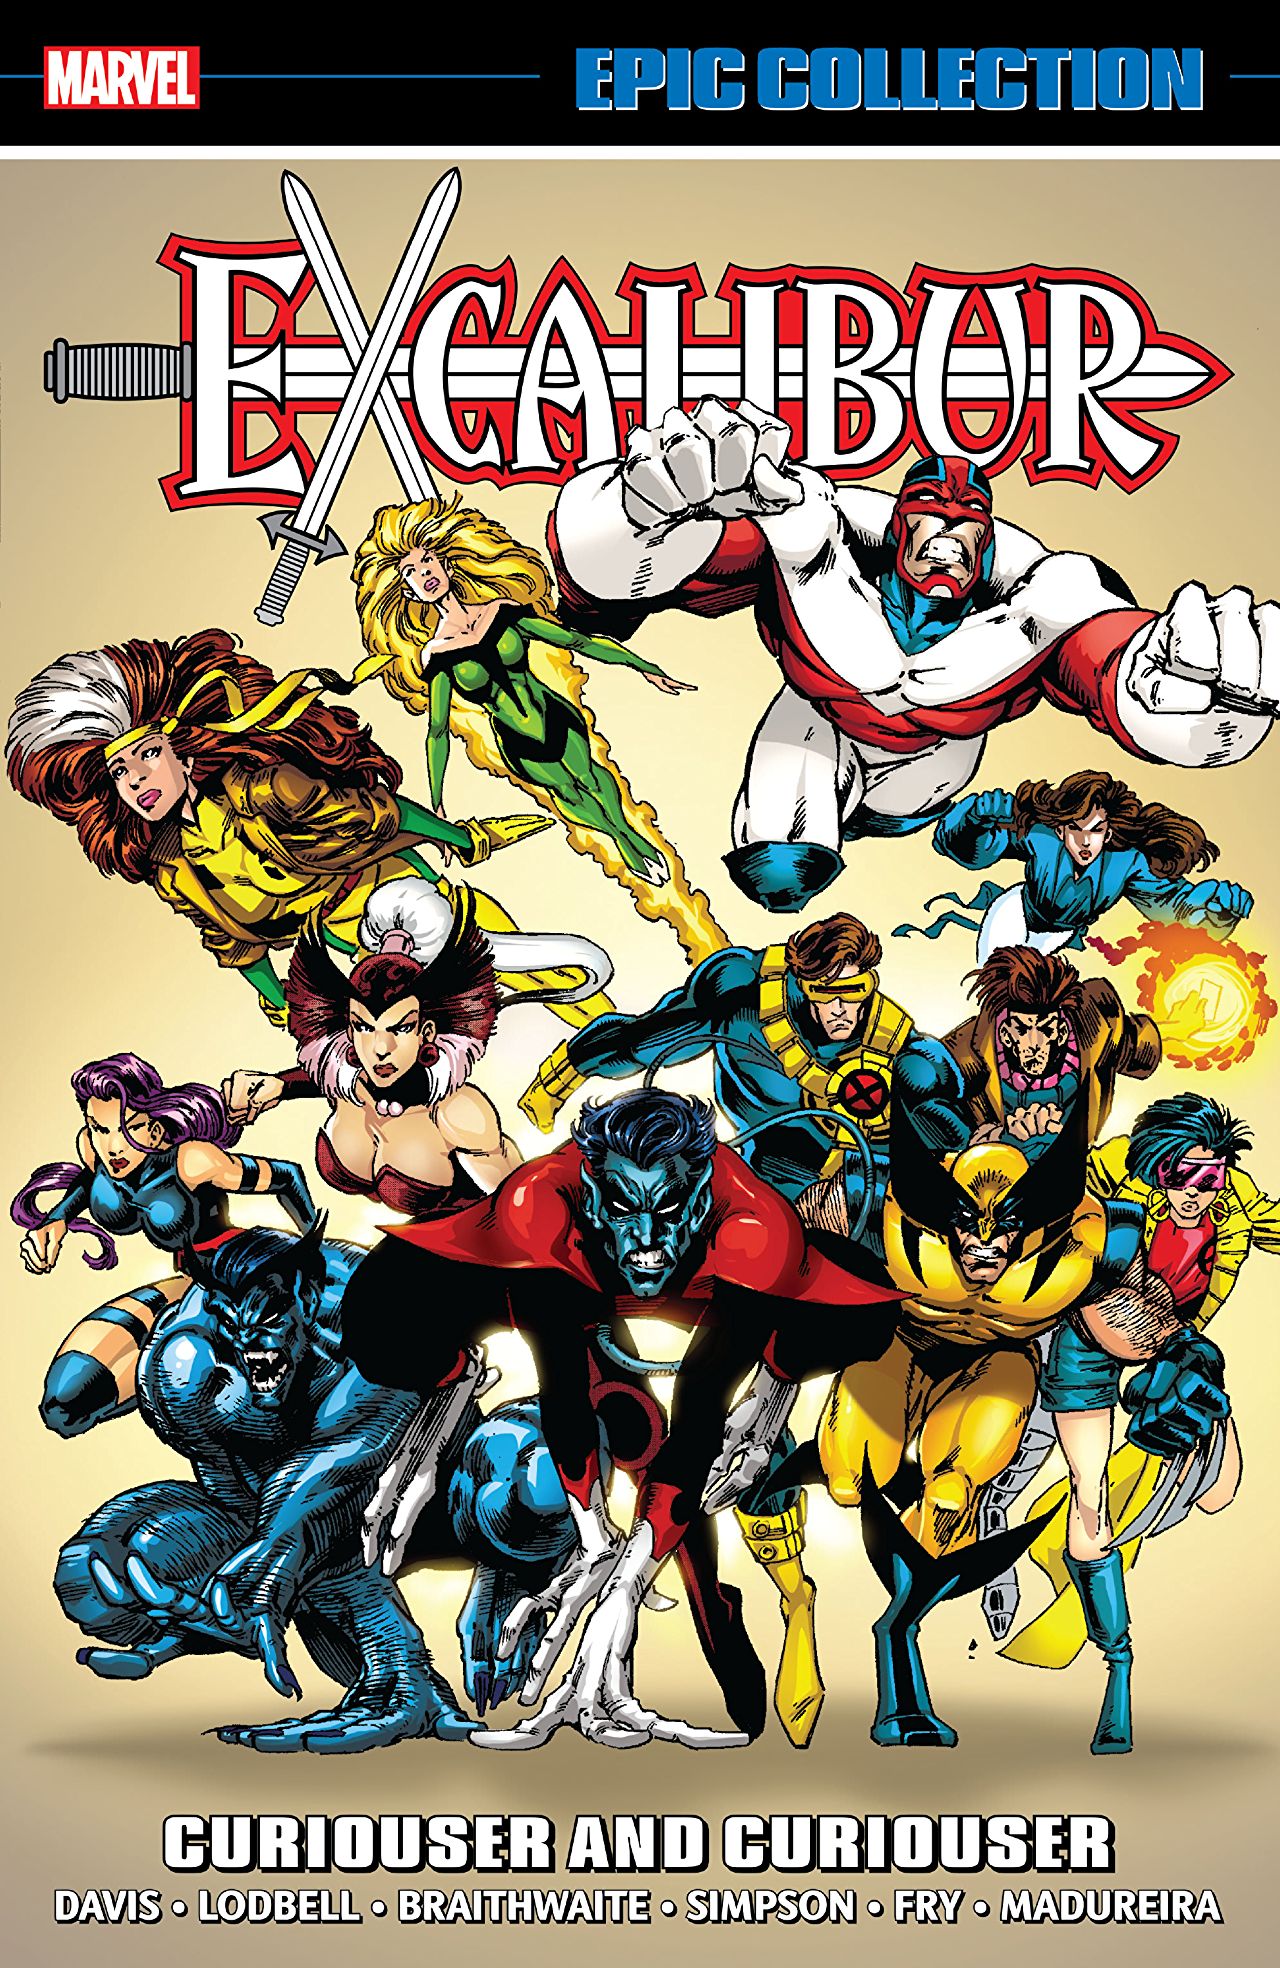 Collection Marvel Epic Panini Comics - Excalibur comics